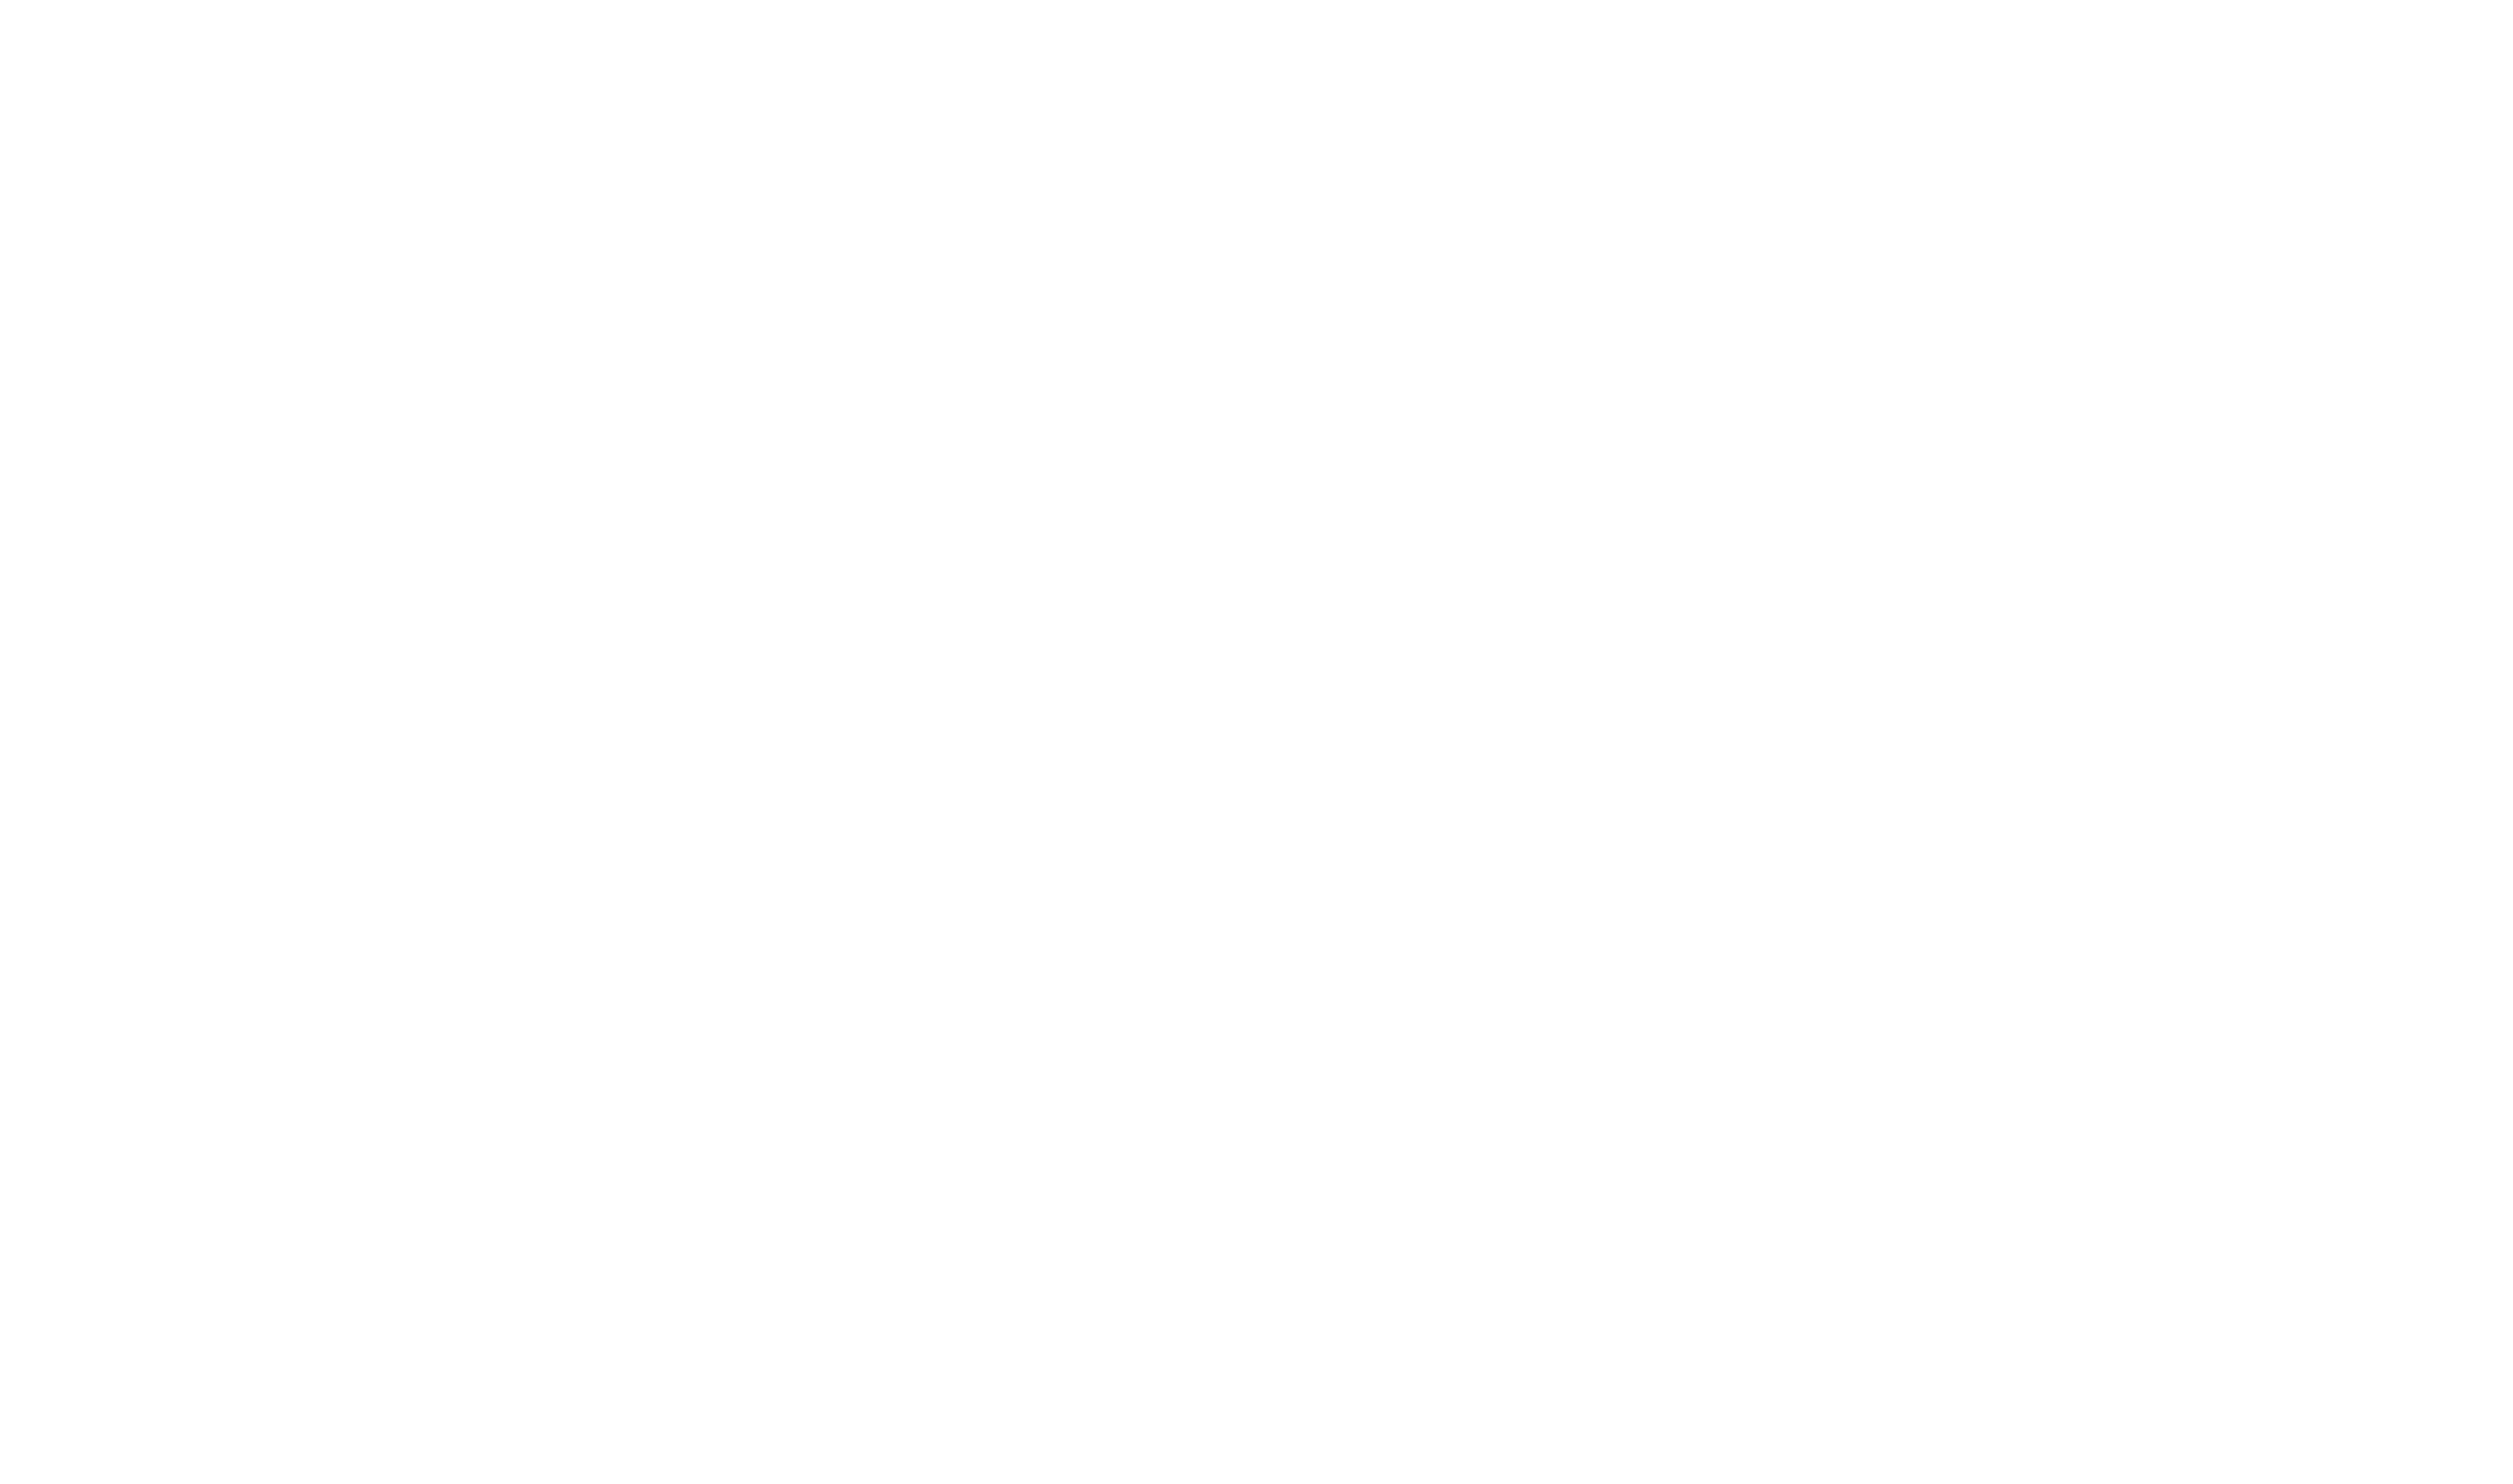  ELECTRONIC ARTS 73039 / EA Plants vs. Zombies Garden Warfare /  Action/Adventure Game - Xbox One : Video Games